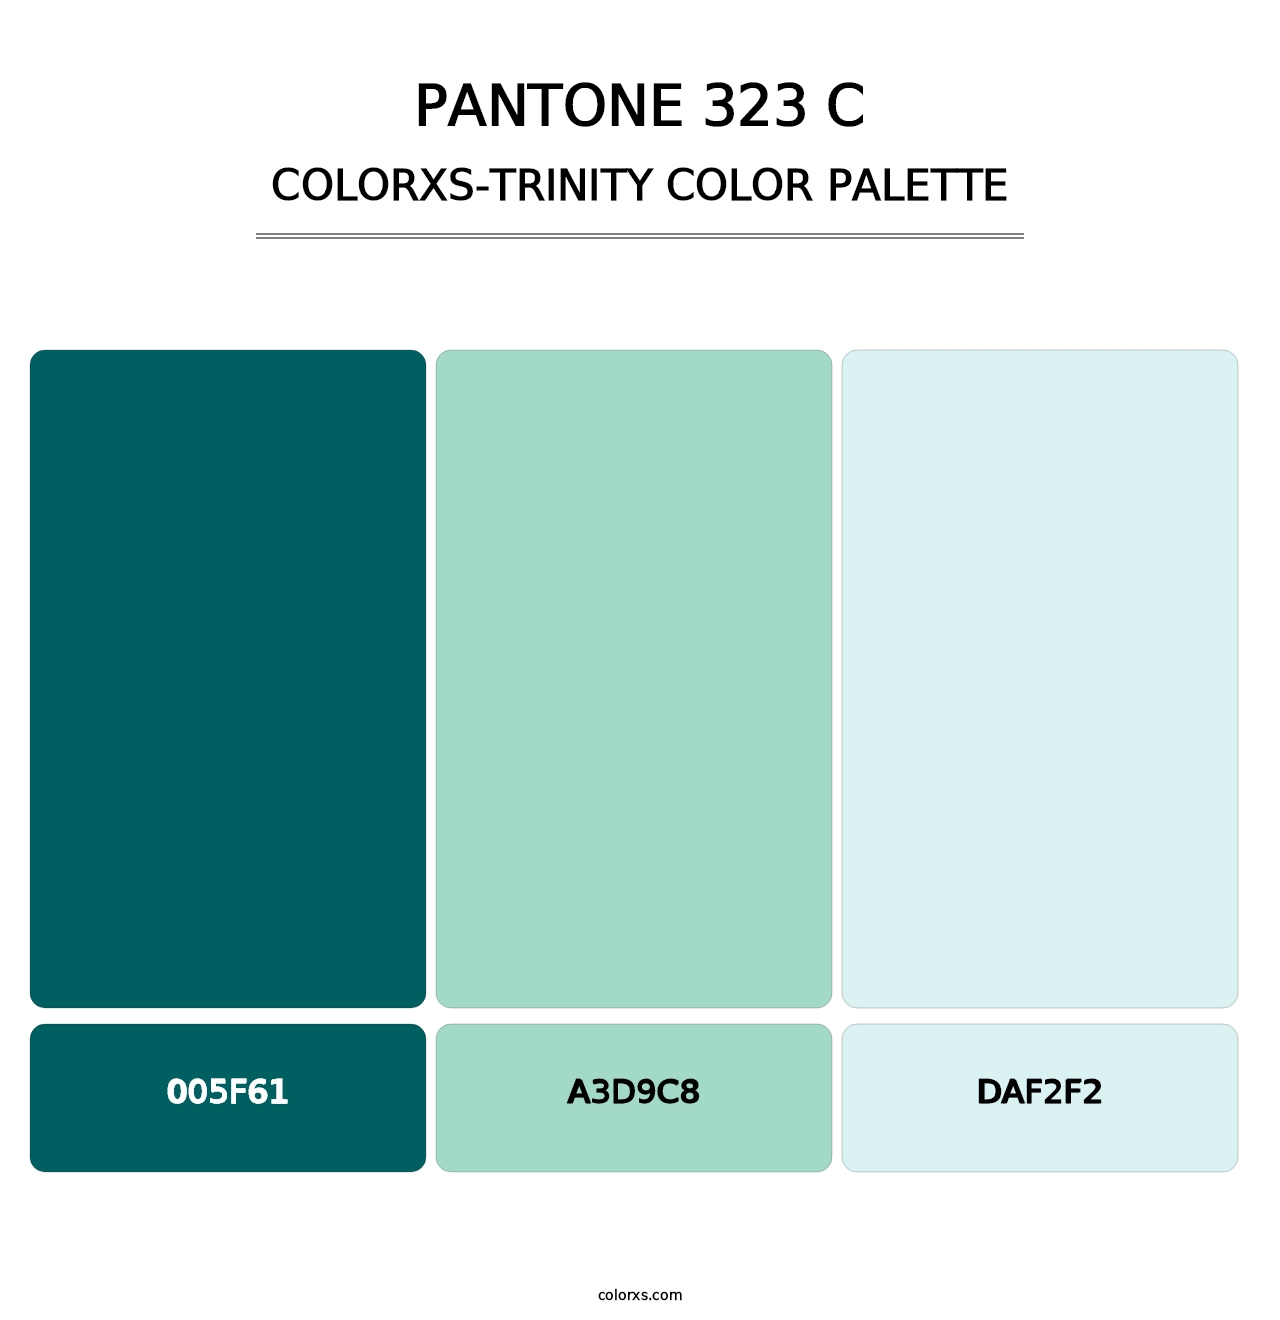 PANTONE 323 C - Colorxs Trinity Palette